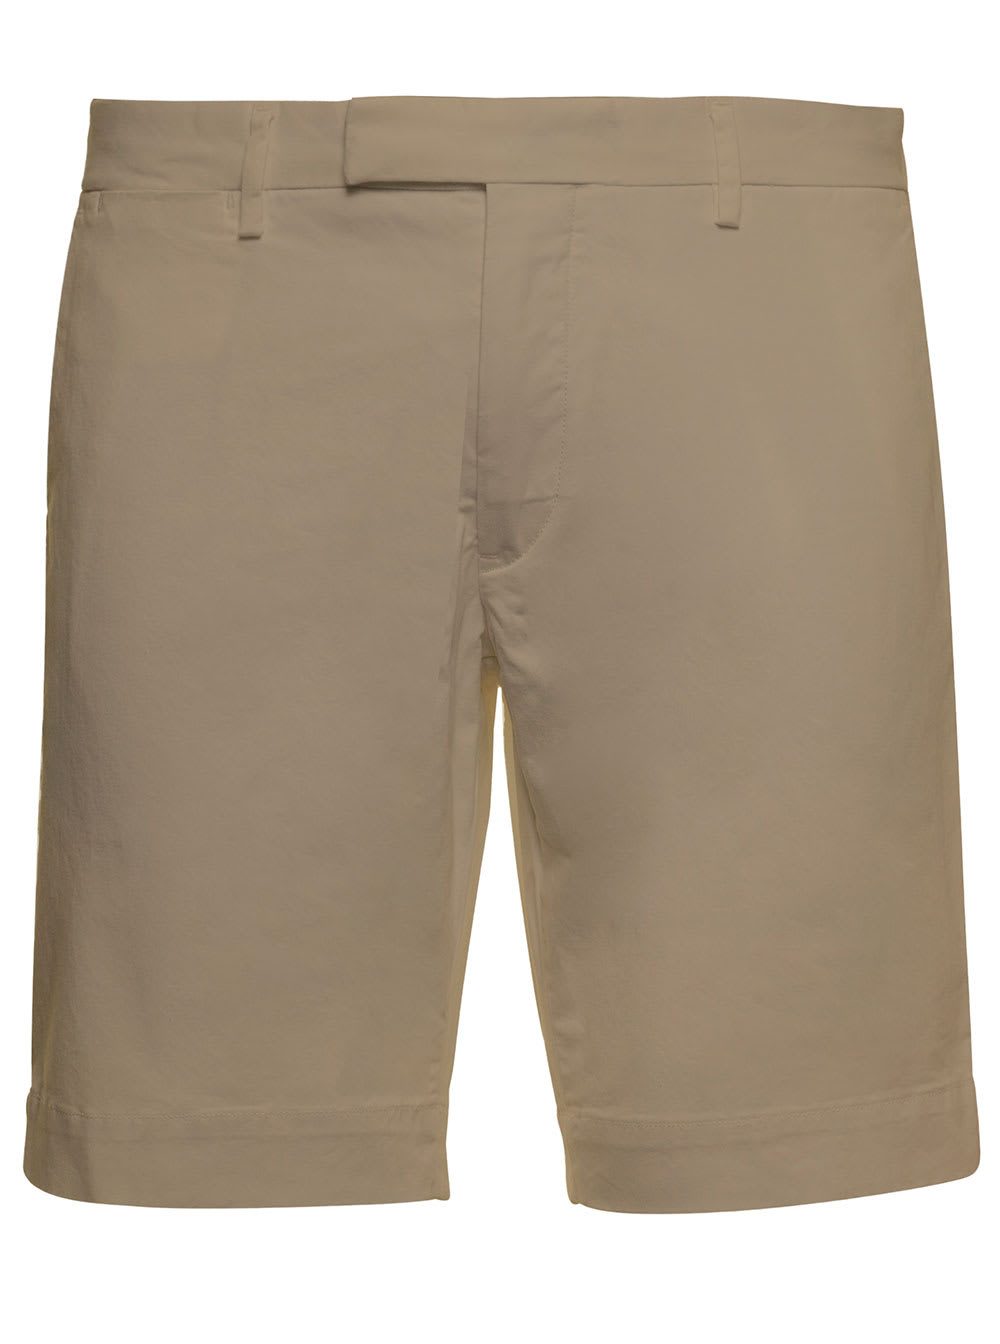 Ralph Lauren Mens Beige Cotton Bermuda Shorts